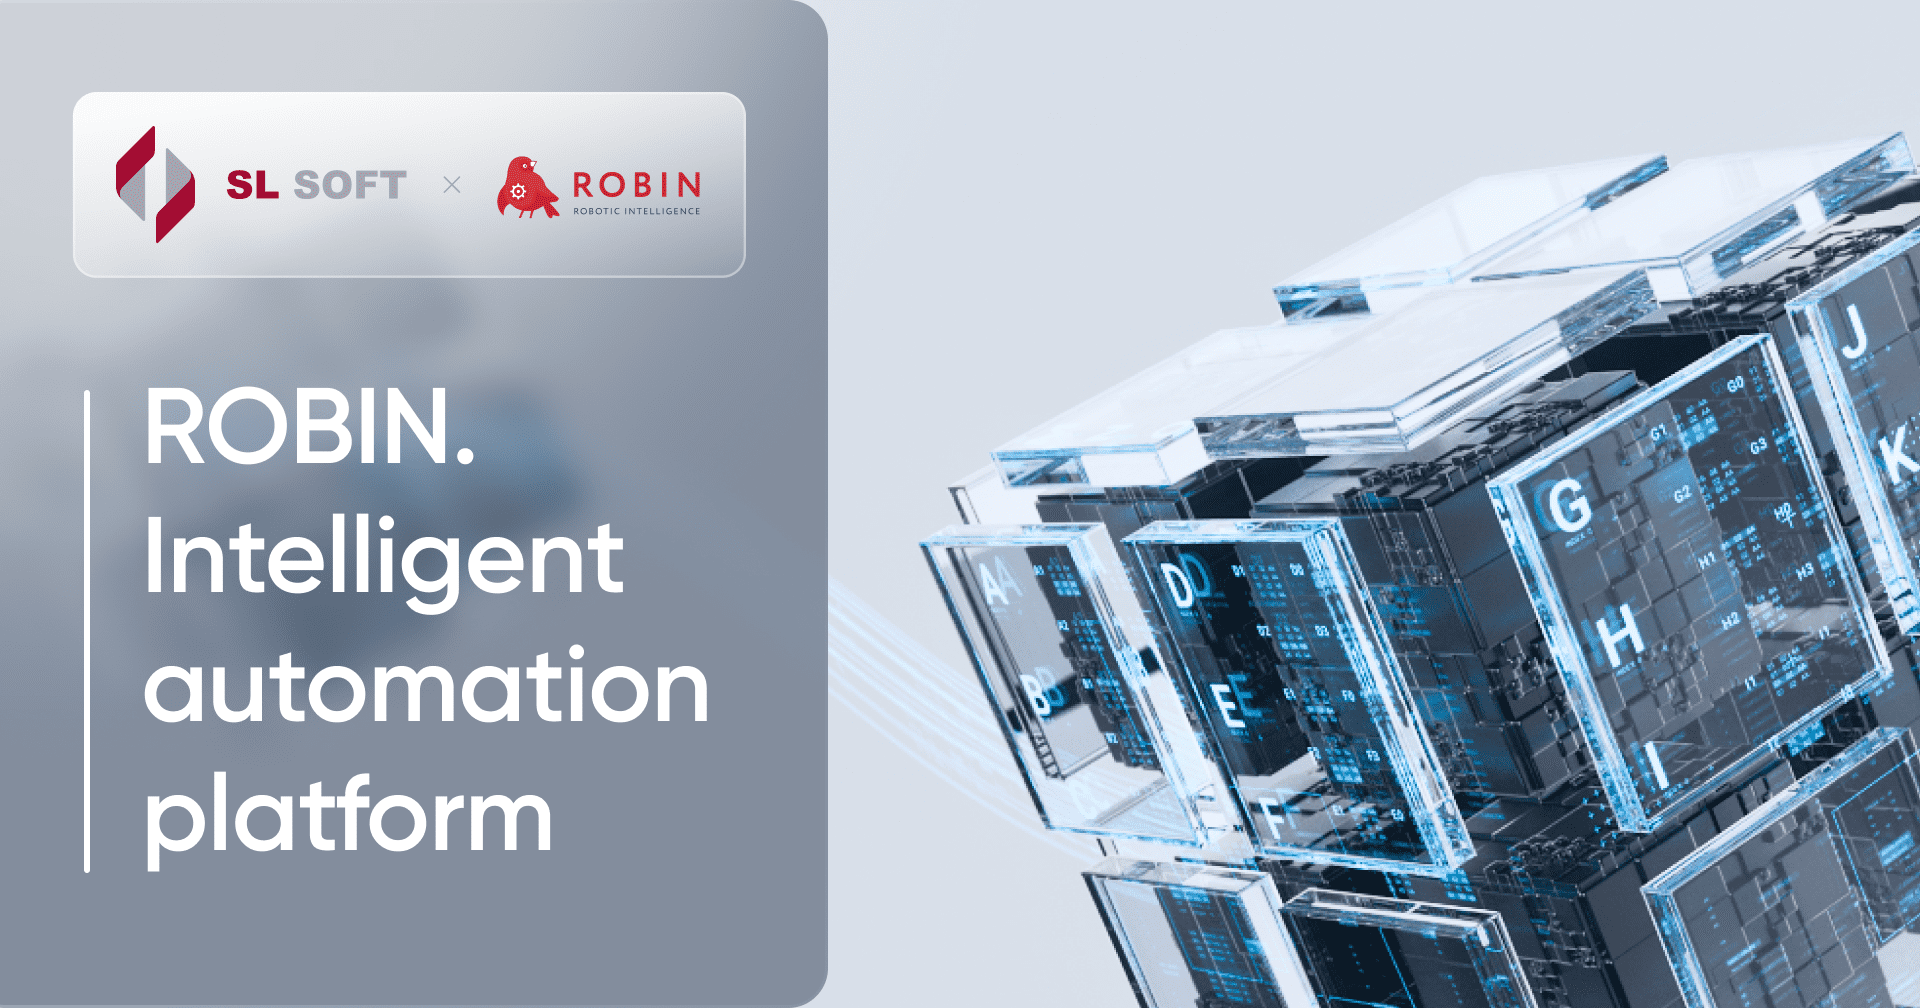 ROBIN. Intelligent automation platform